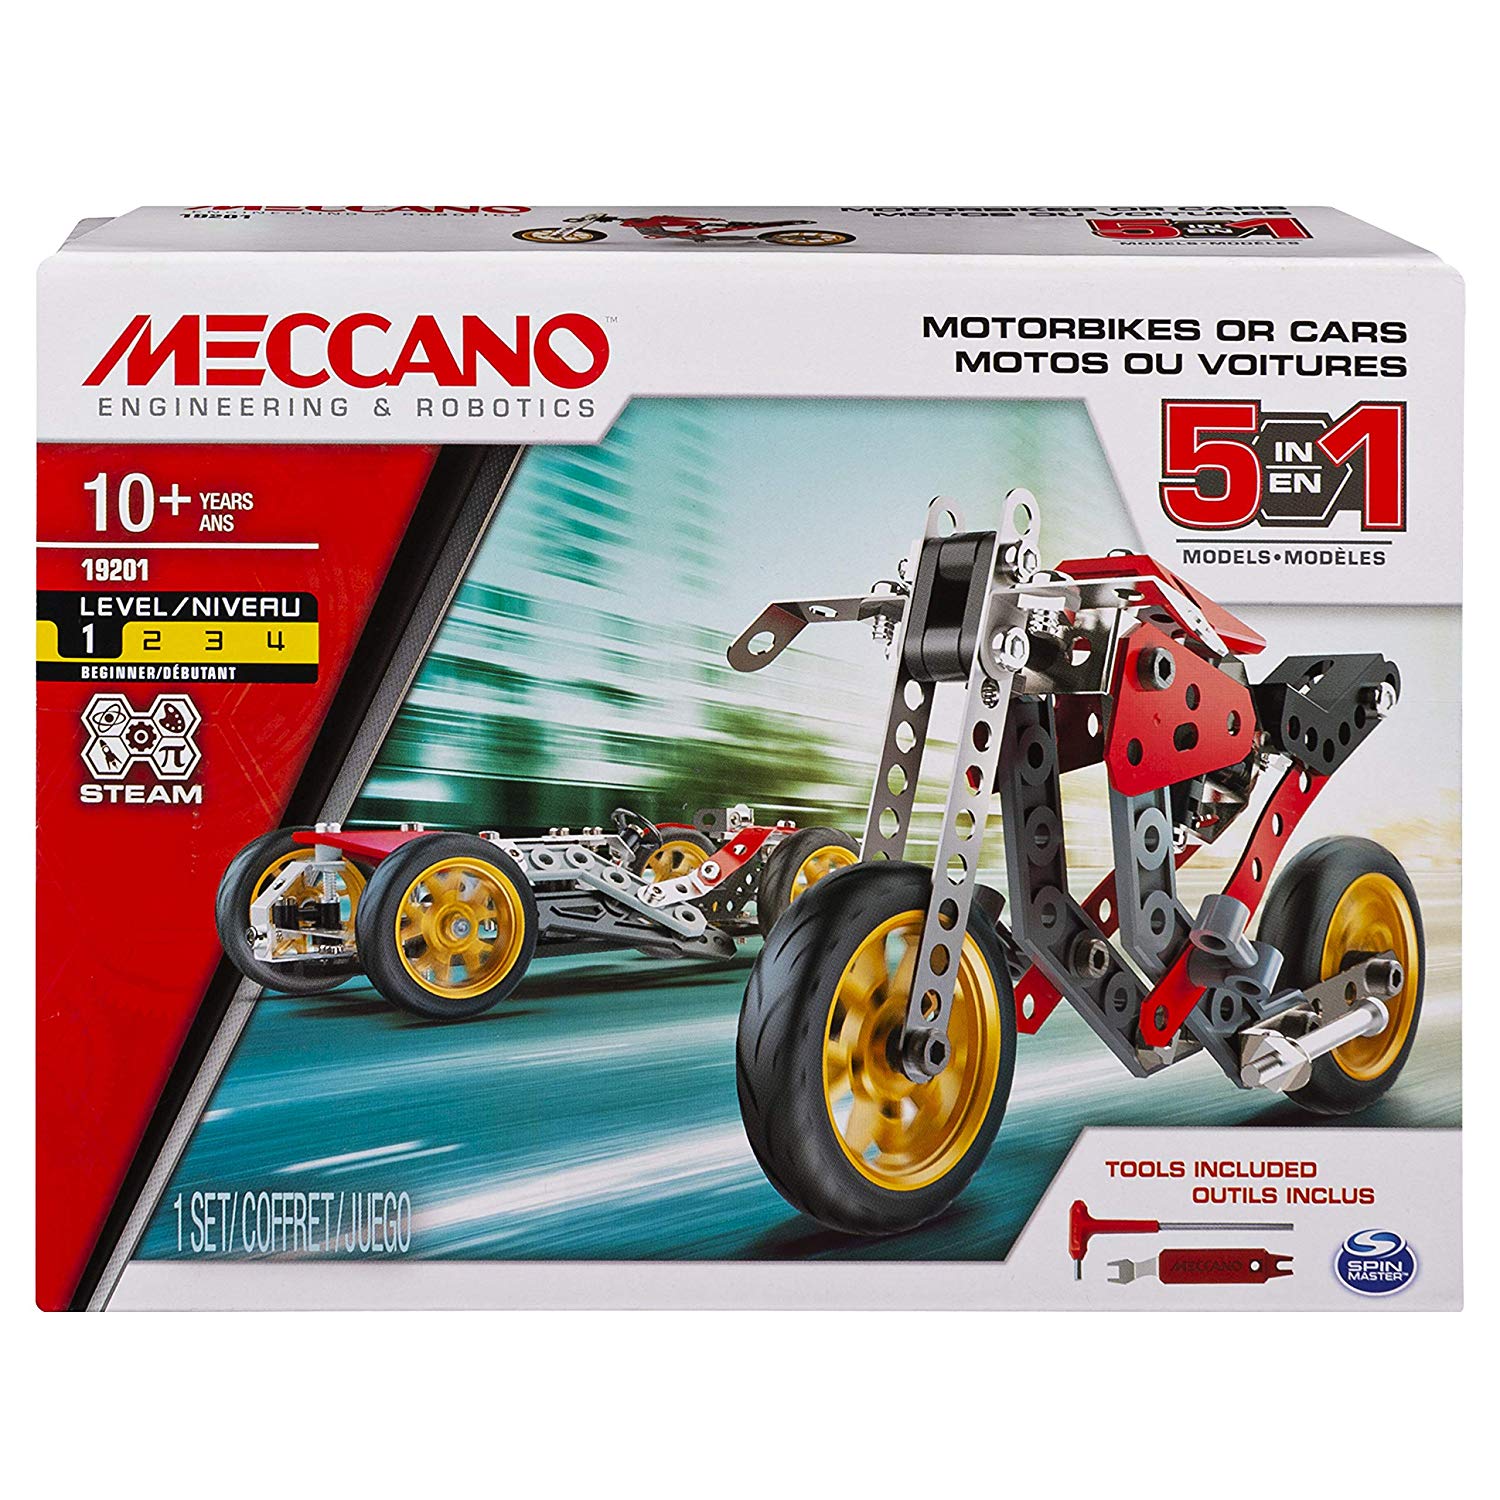 meccano 10 model set motorized car